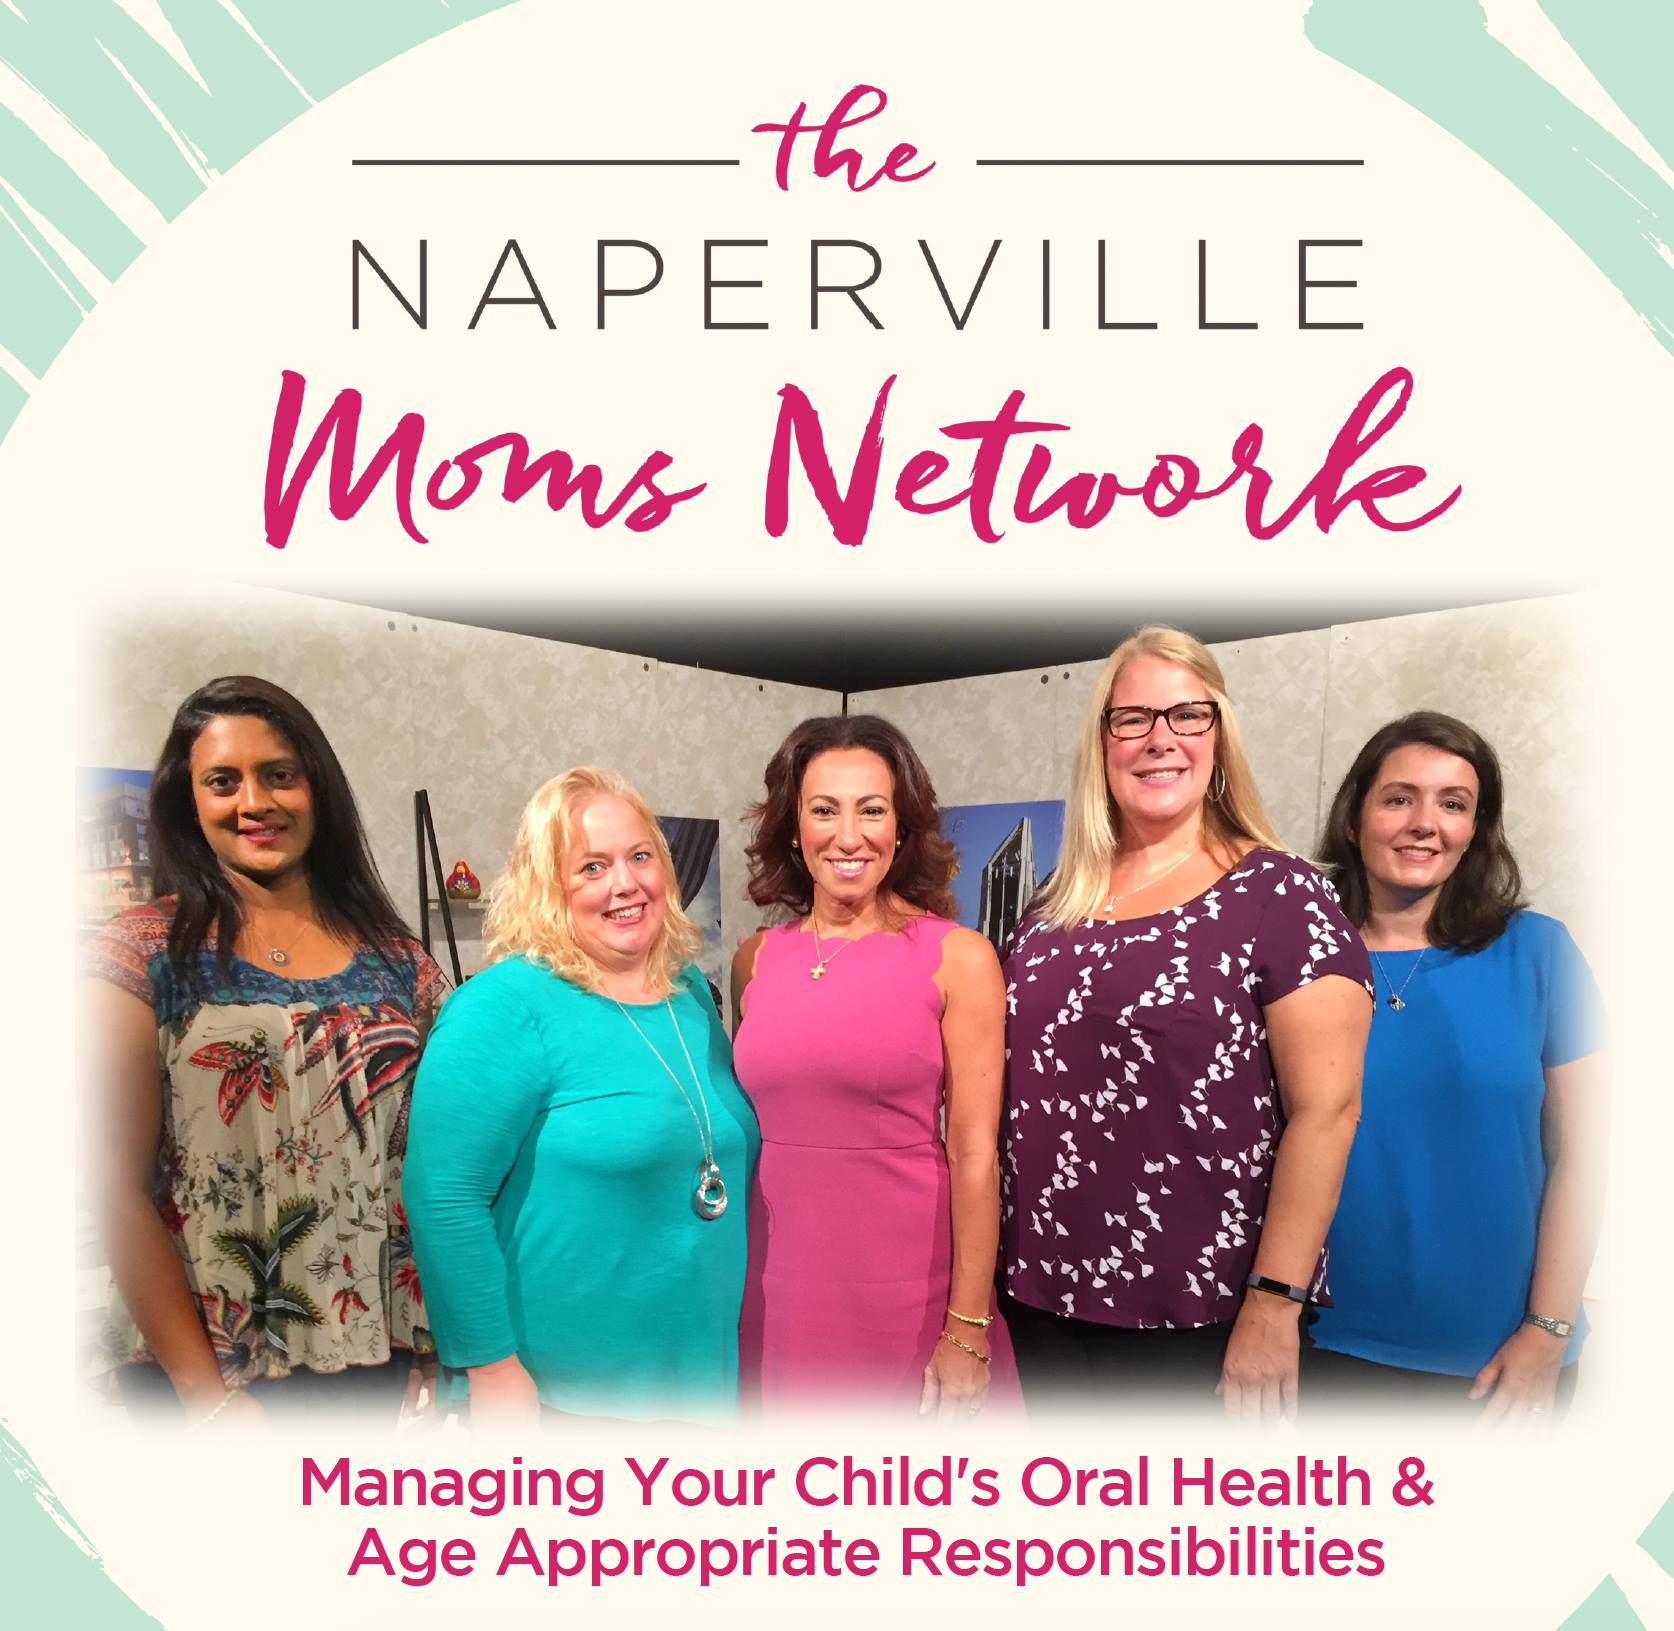 Naperville Moms Network